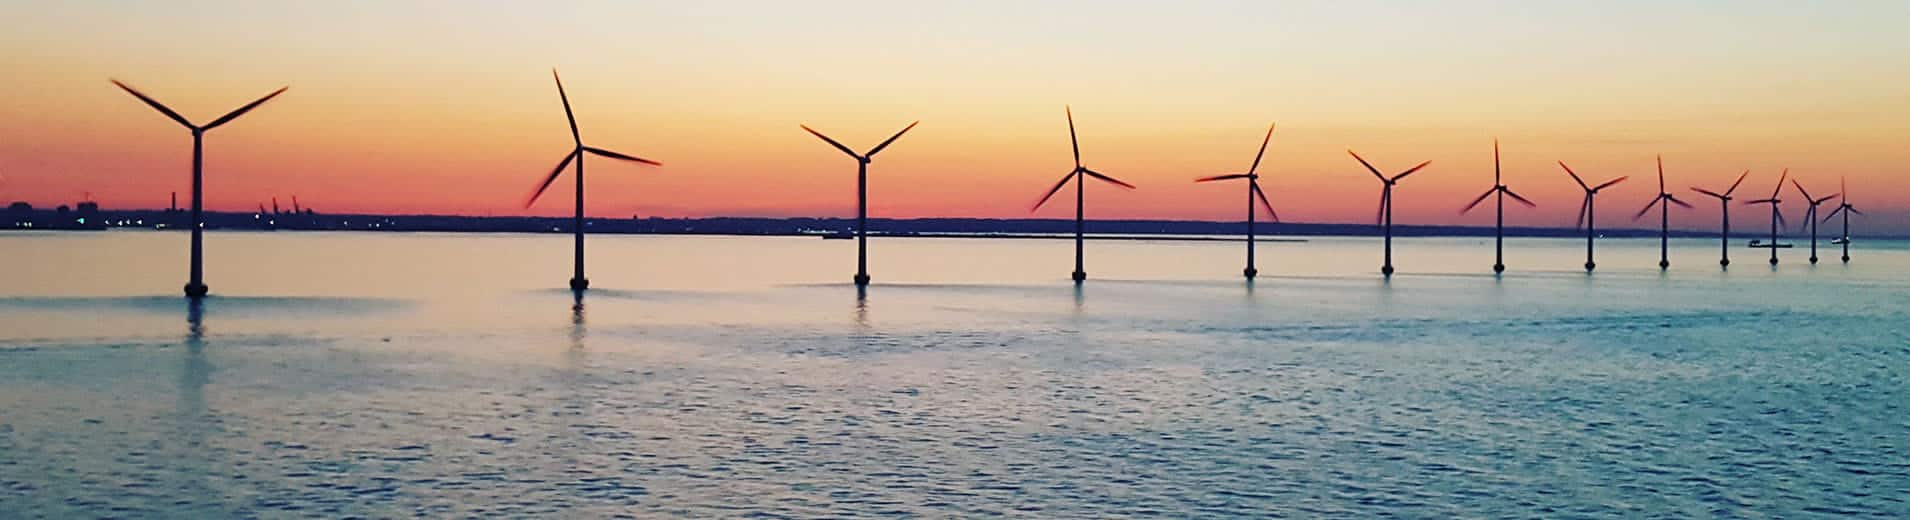 Wind_turbines_at_sunset_S_0842